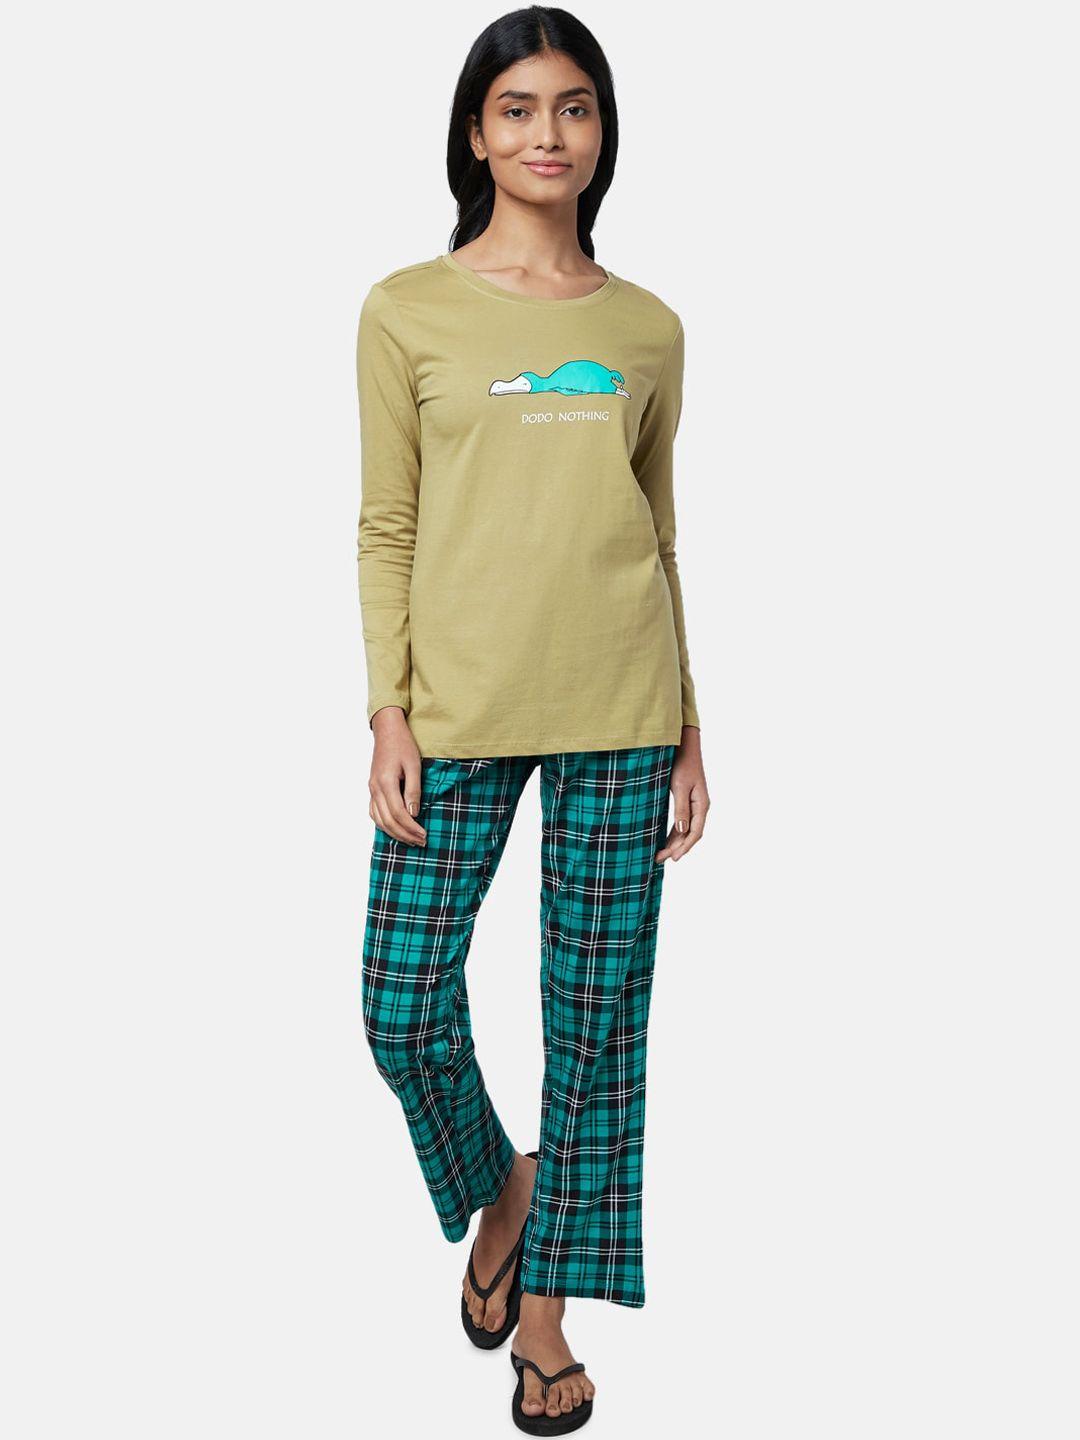 dreamz-by-pantaloons-women-khaki-&-green-night-suit